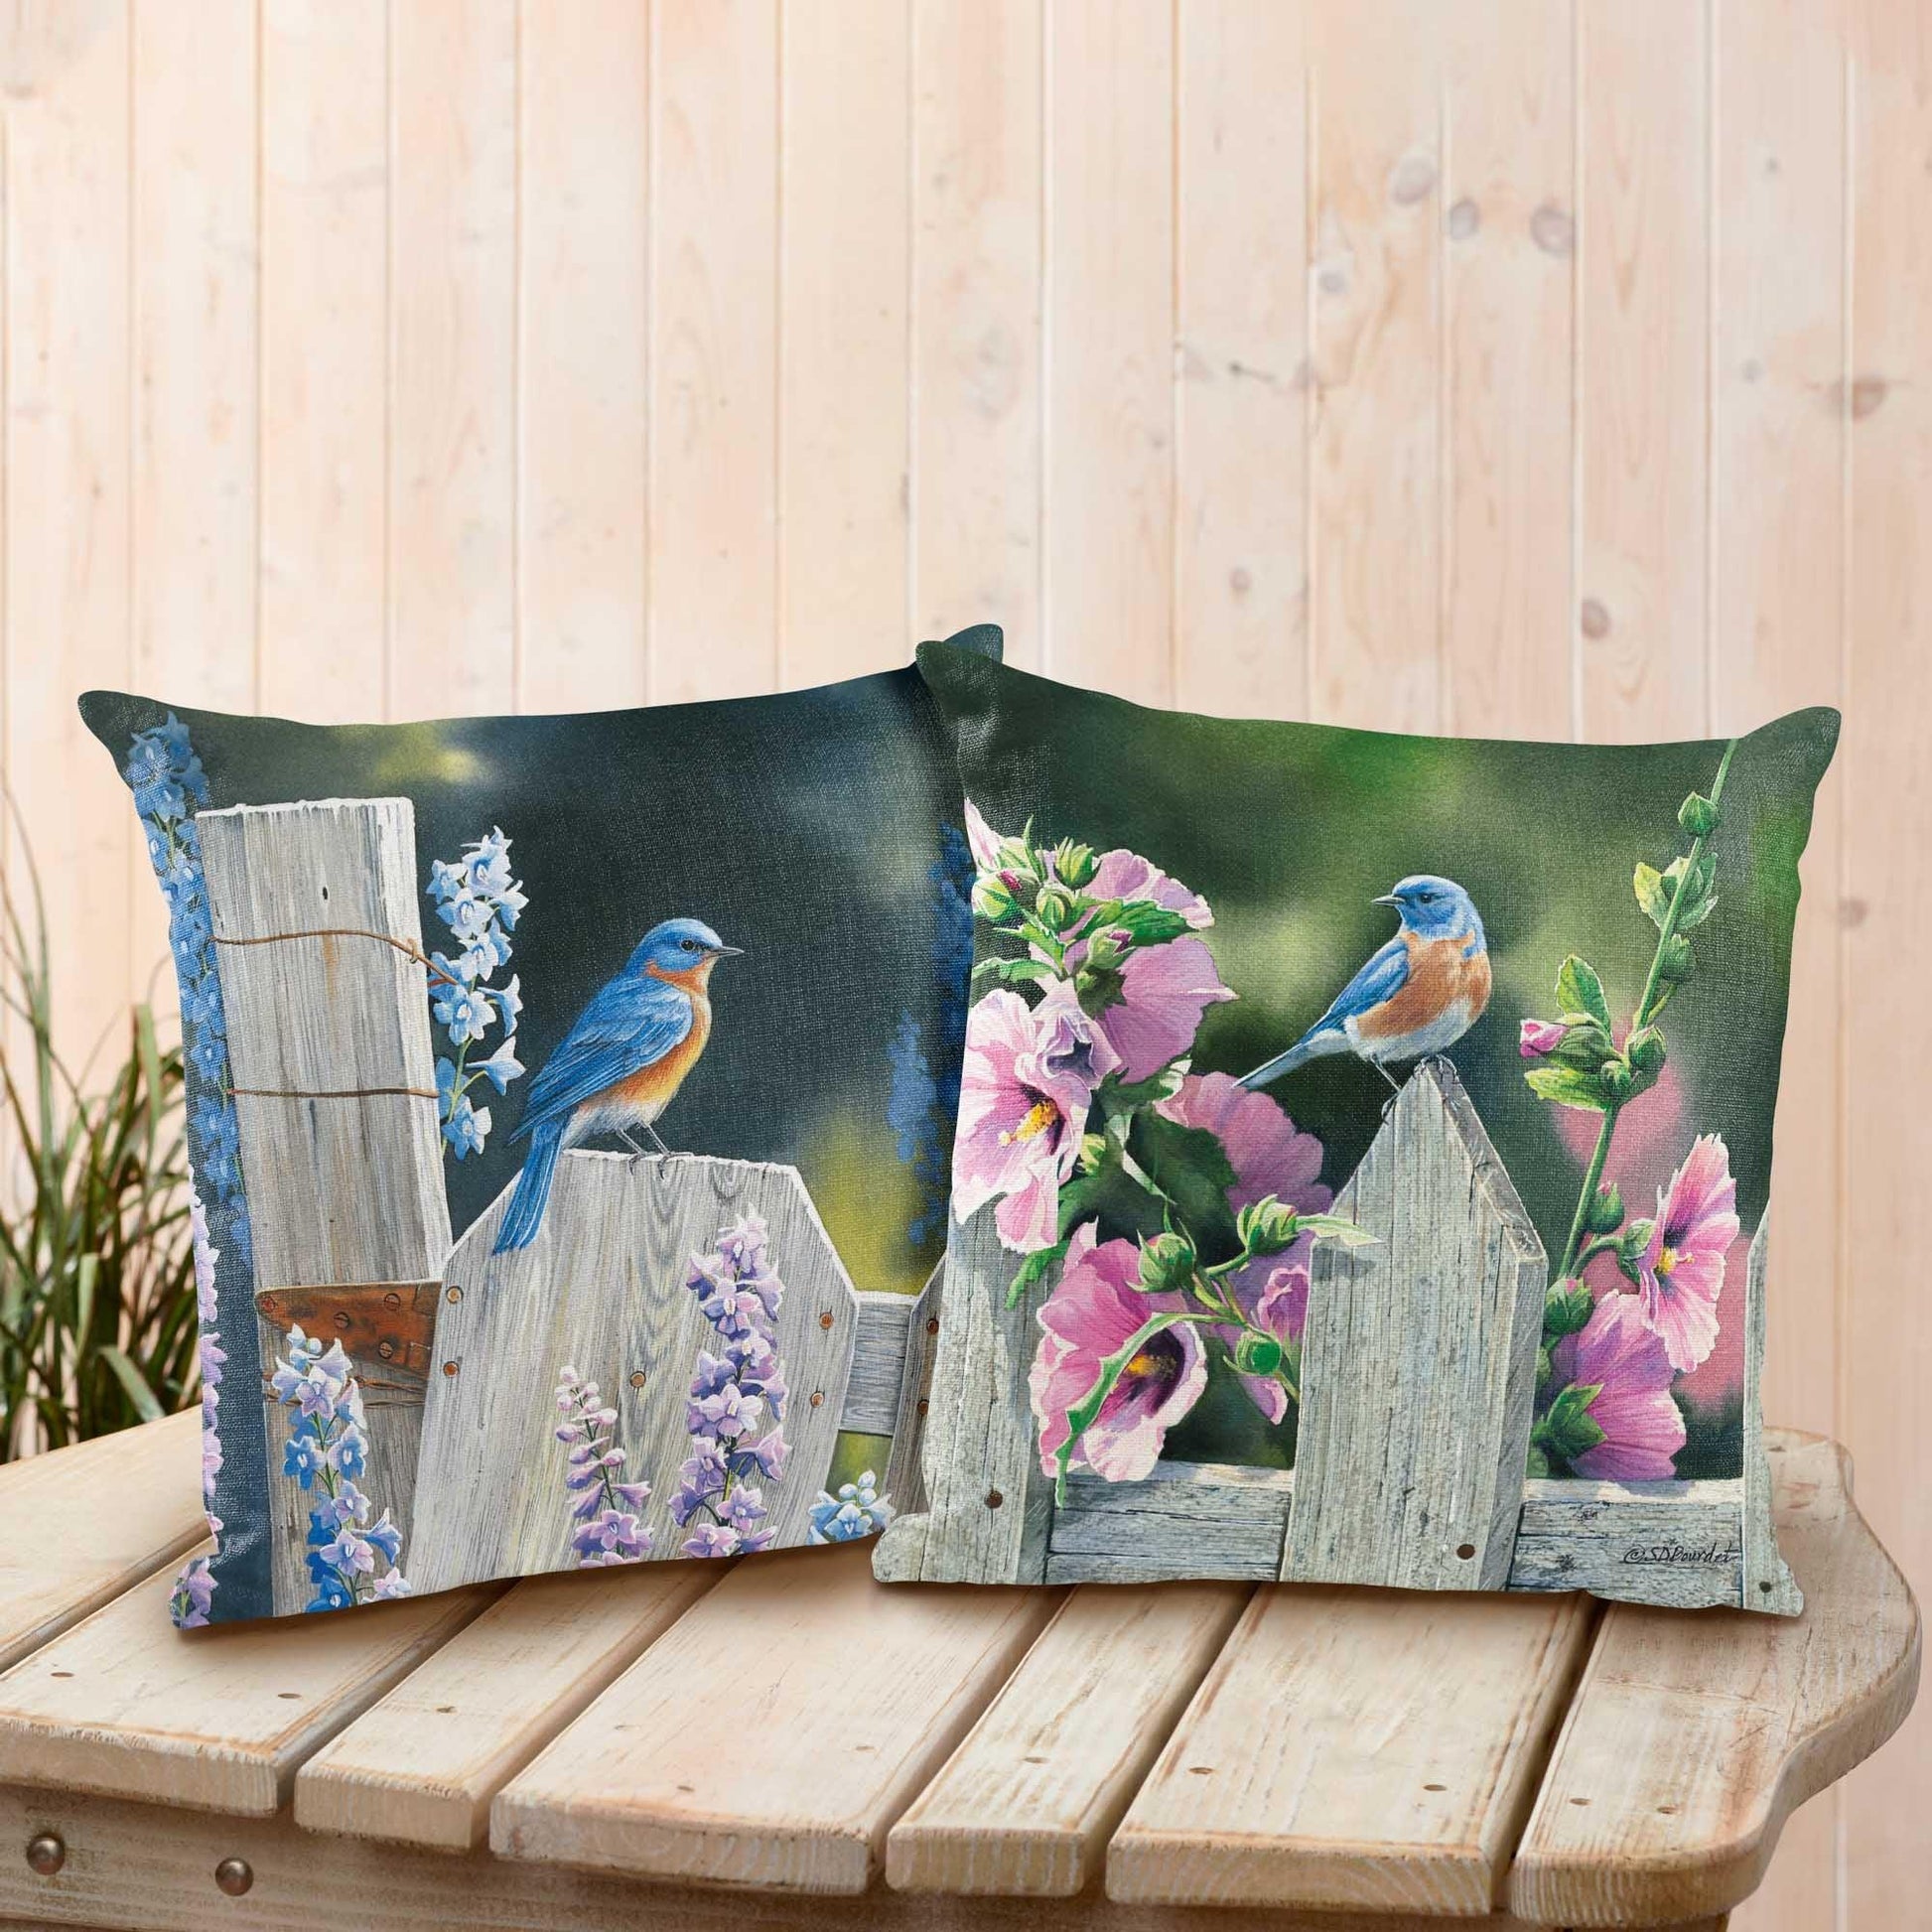 Bluebirds Decorative Pillow - Wild Wings